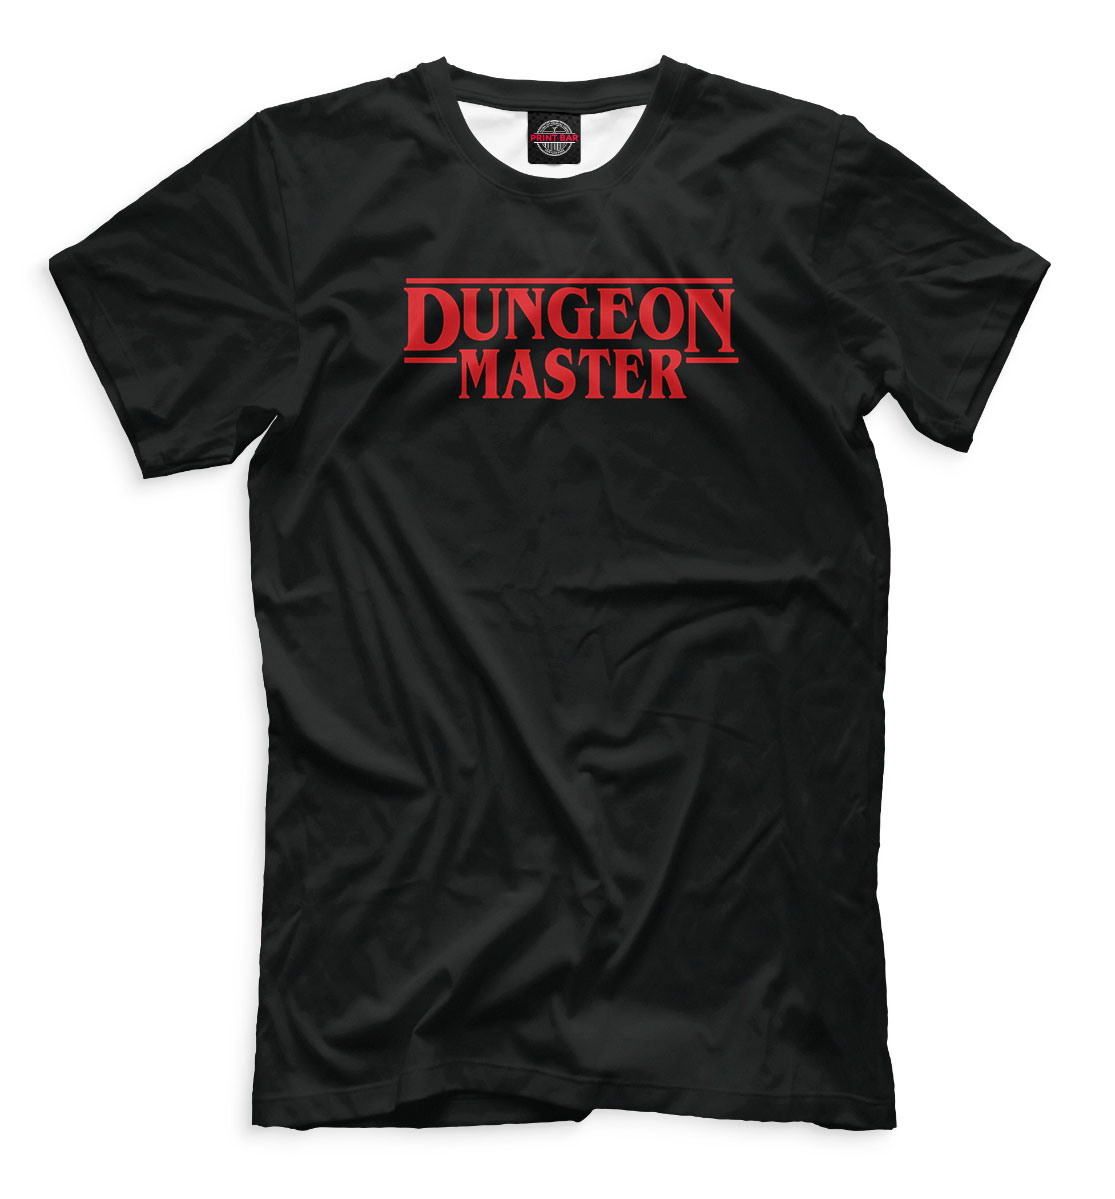 Футболка Dungeon Master для мальчиков, артикул: GCM-724012-fut-2mp